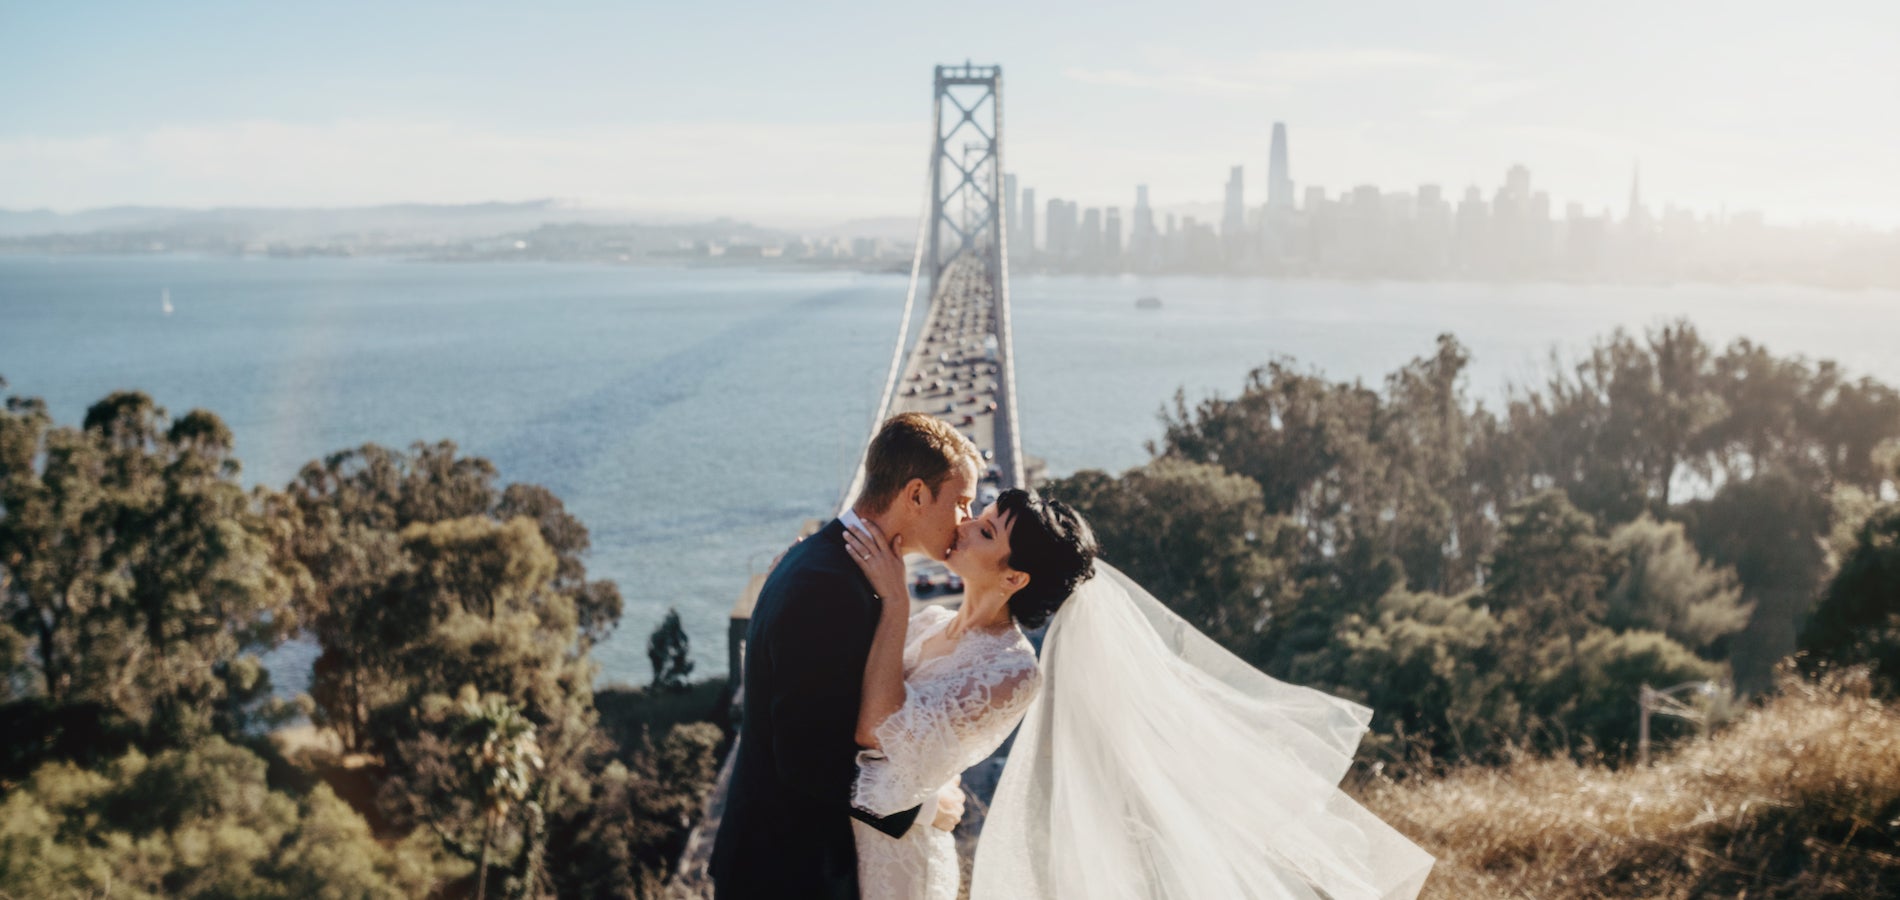 Photo of bride and groom taken using wedding photography tips